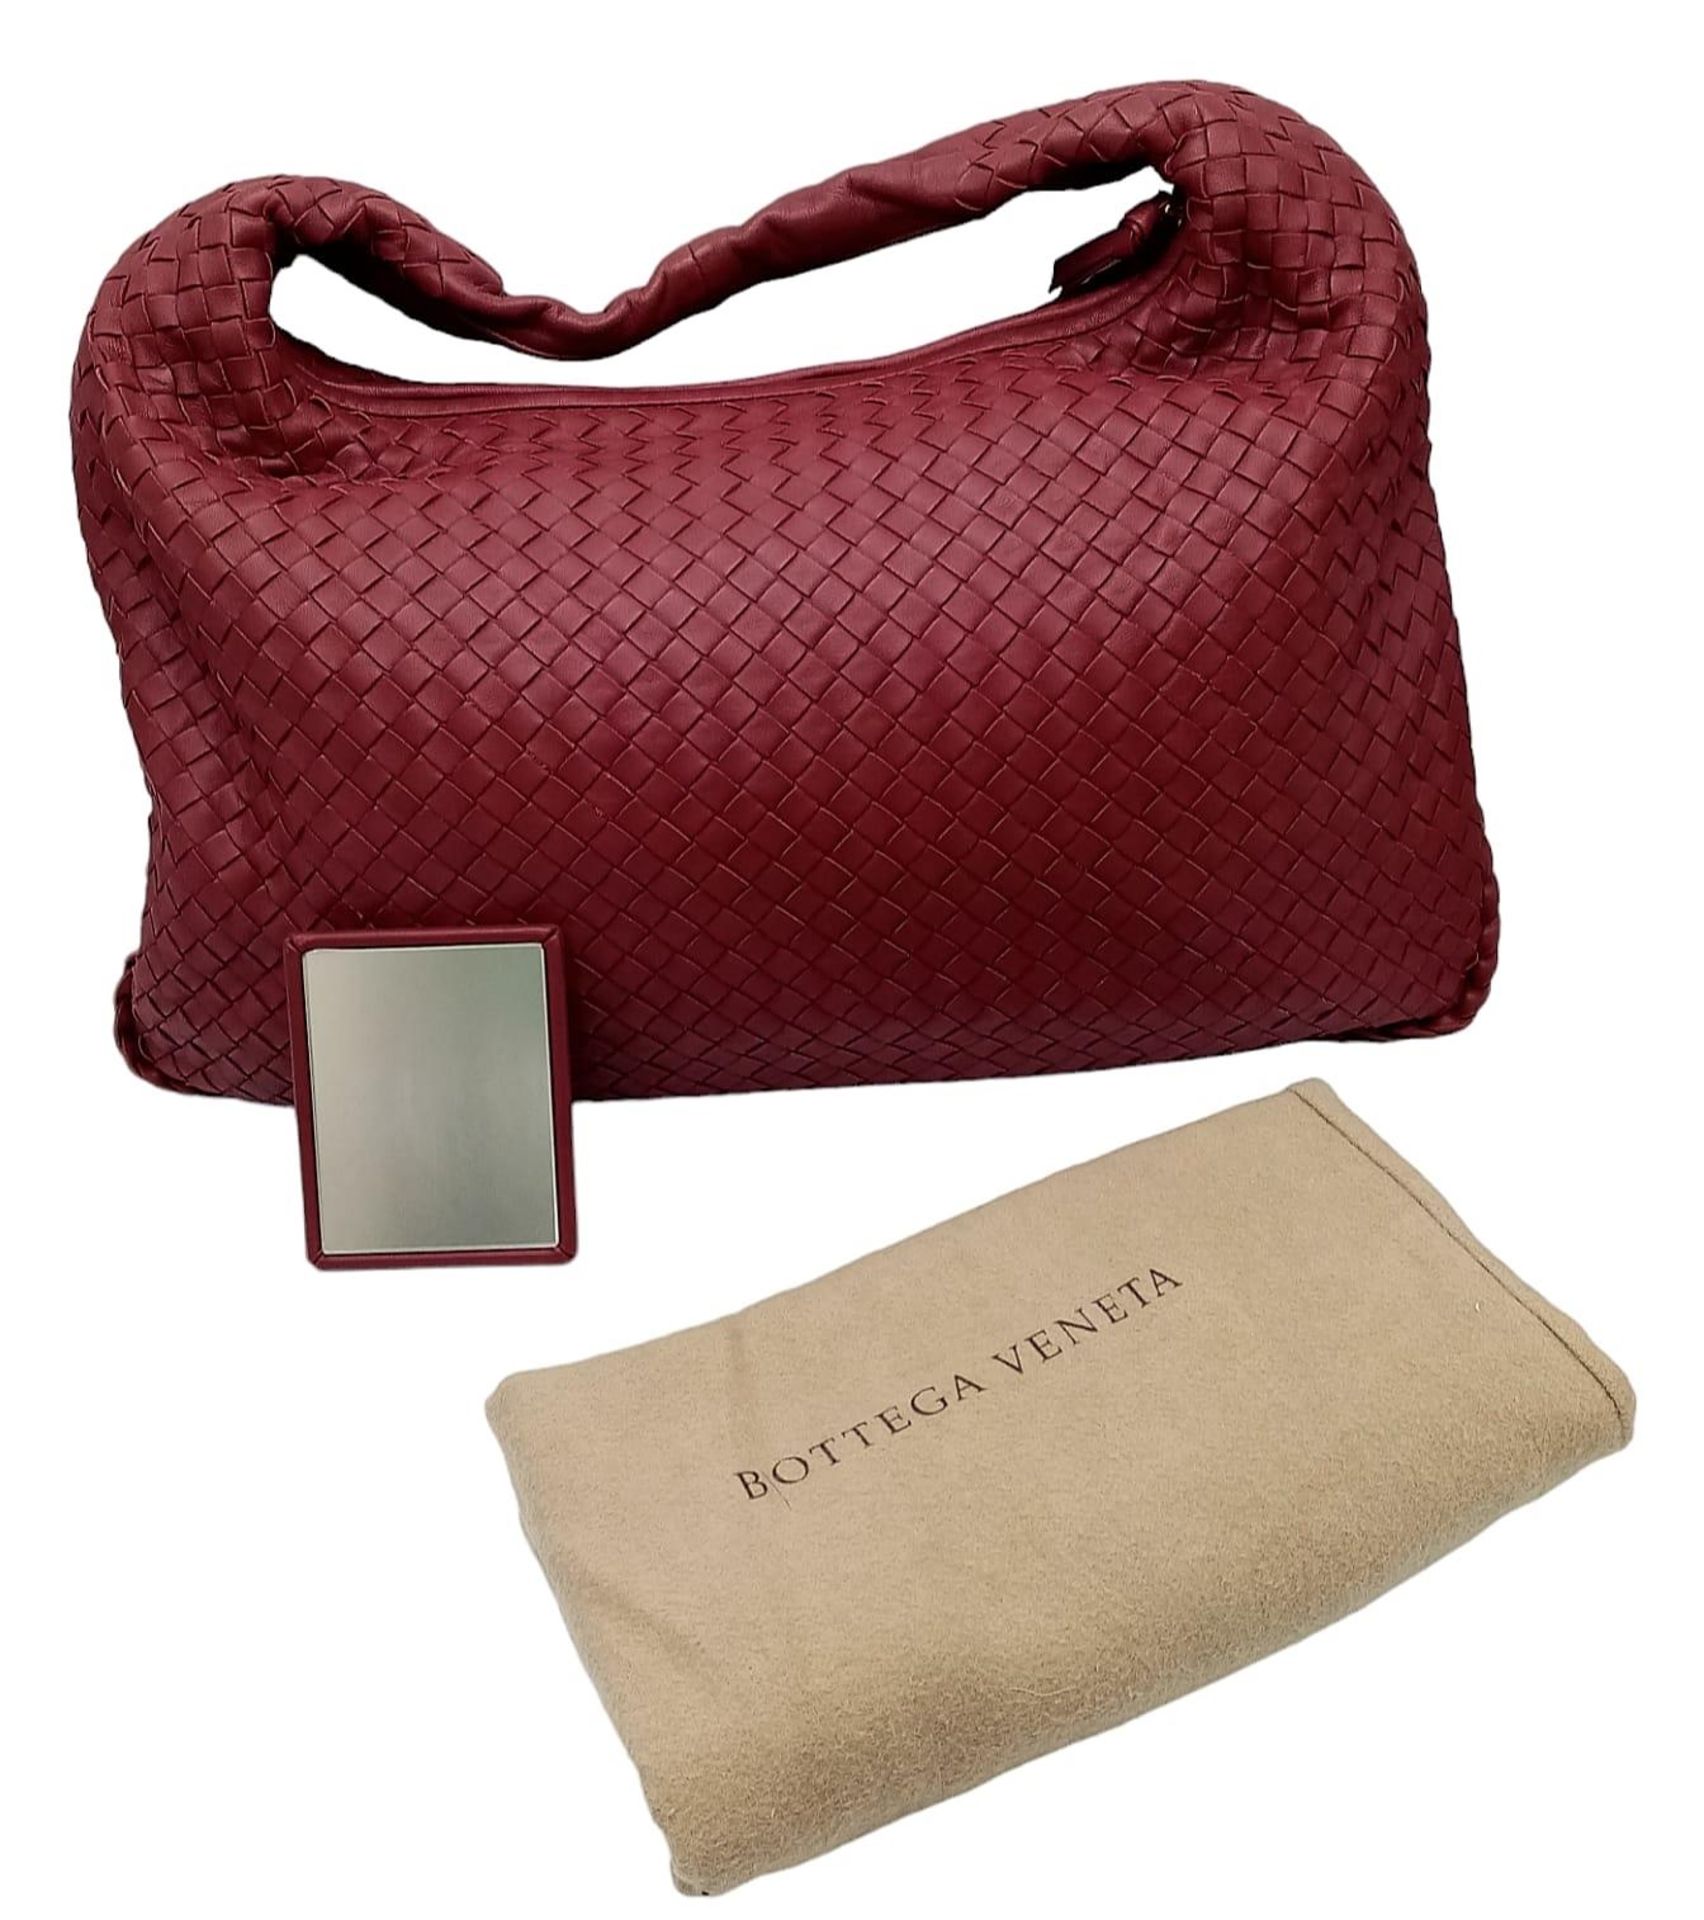 A Bottega Veneta large Hobo bag, soft red nappa leather, beige interior, gold tone top zipper.